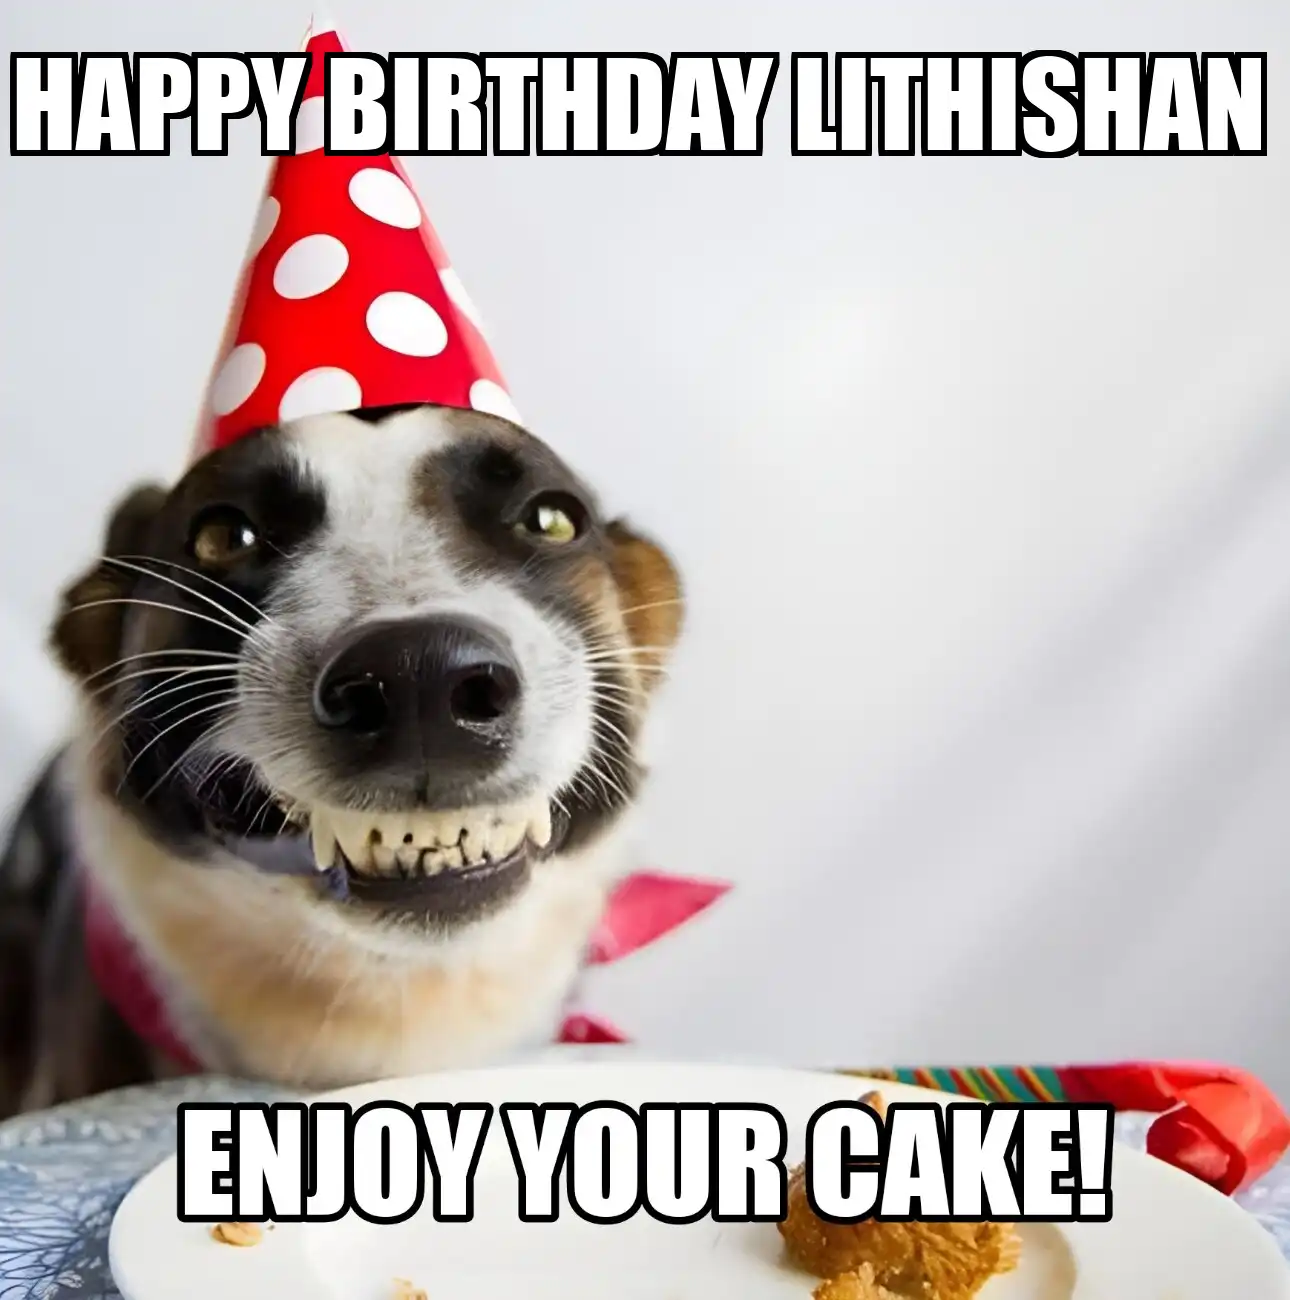 Happy Birthday Lithishan Enjoy Your Cake Dog Meme